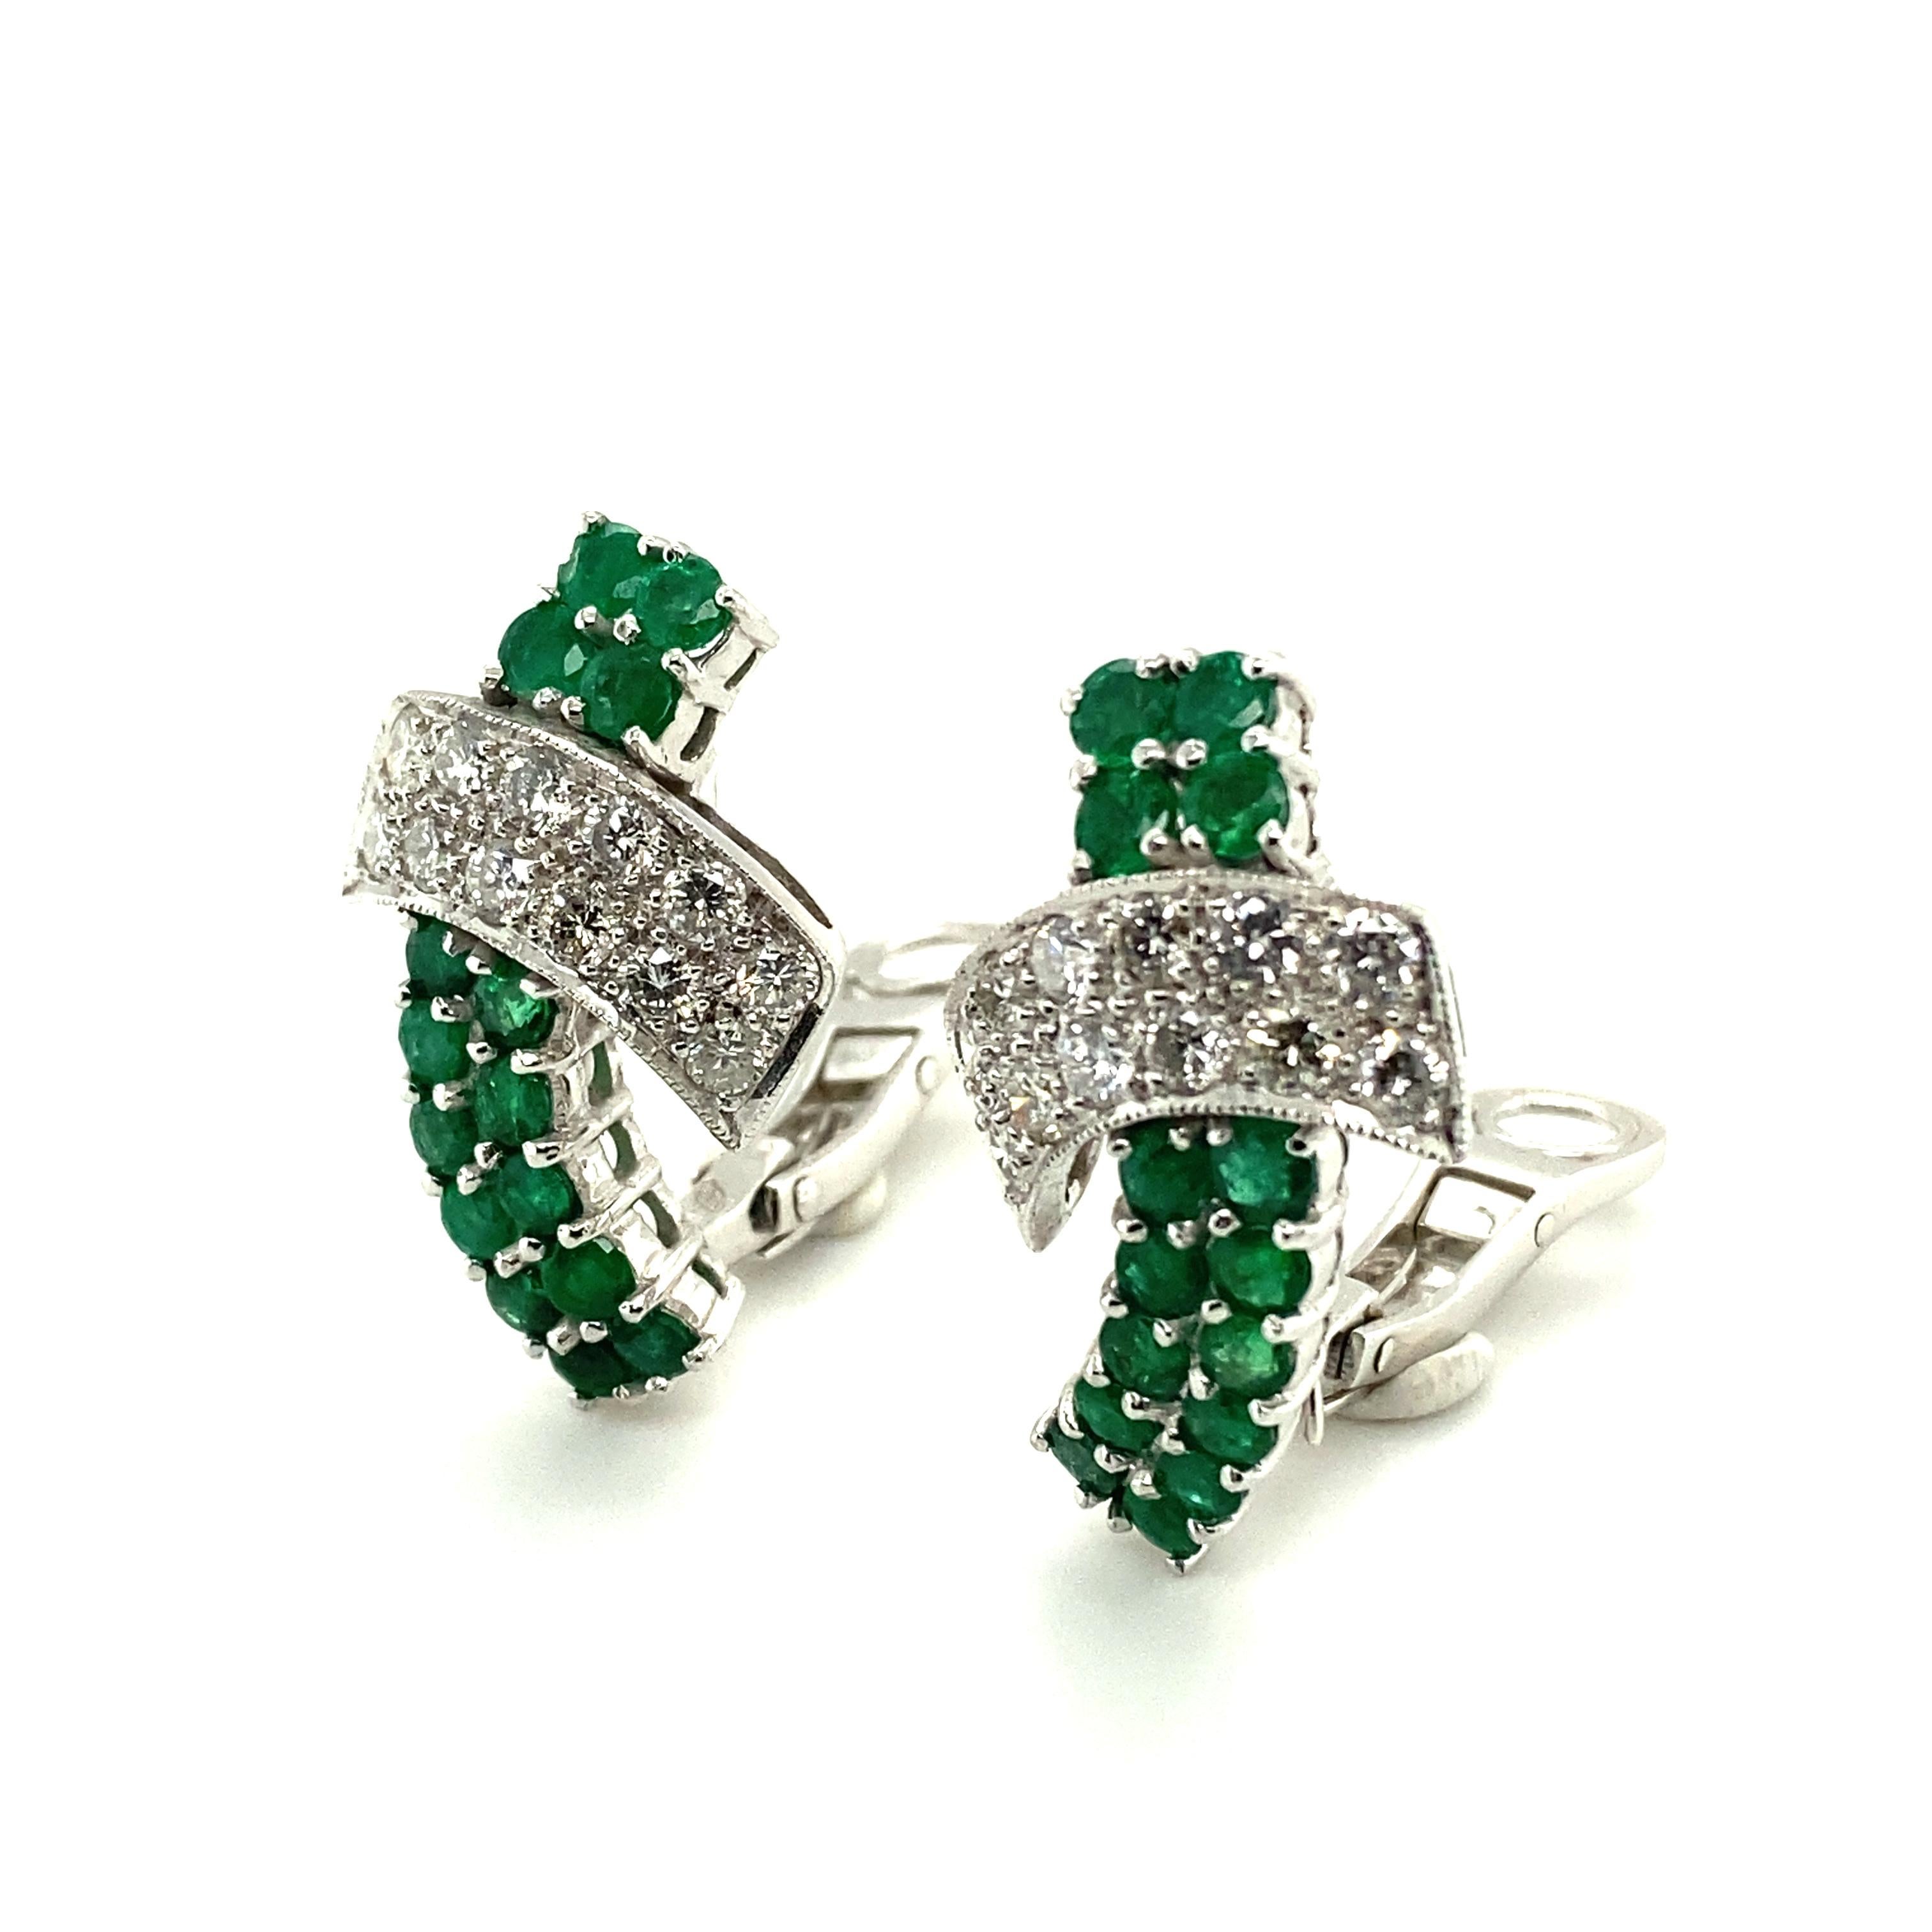 Brilliant Cut Emerald and Diamond Earclips in 18 Karat White Gold